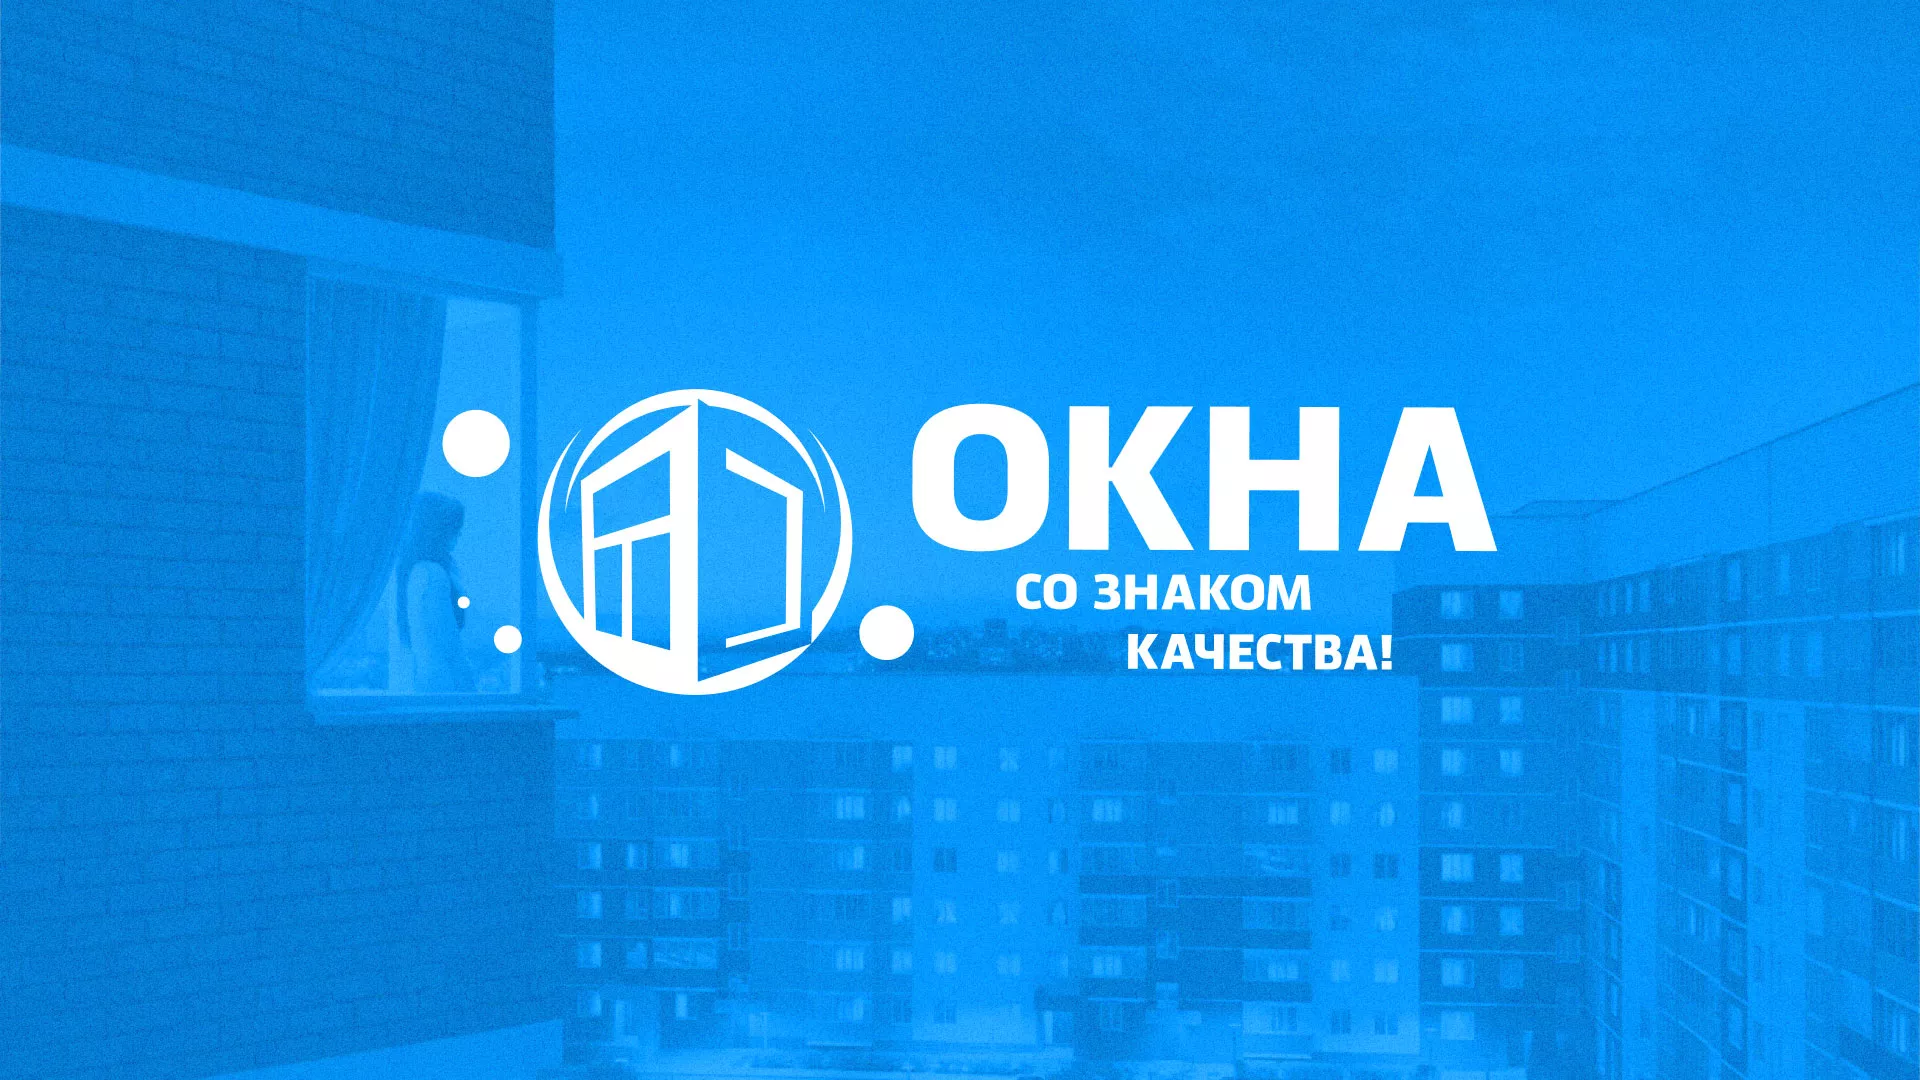 Создание сайта компании «Окна ВИДО» в Каменск-Шахтинске